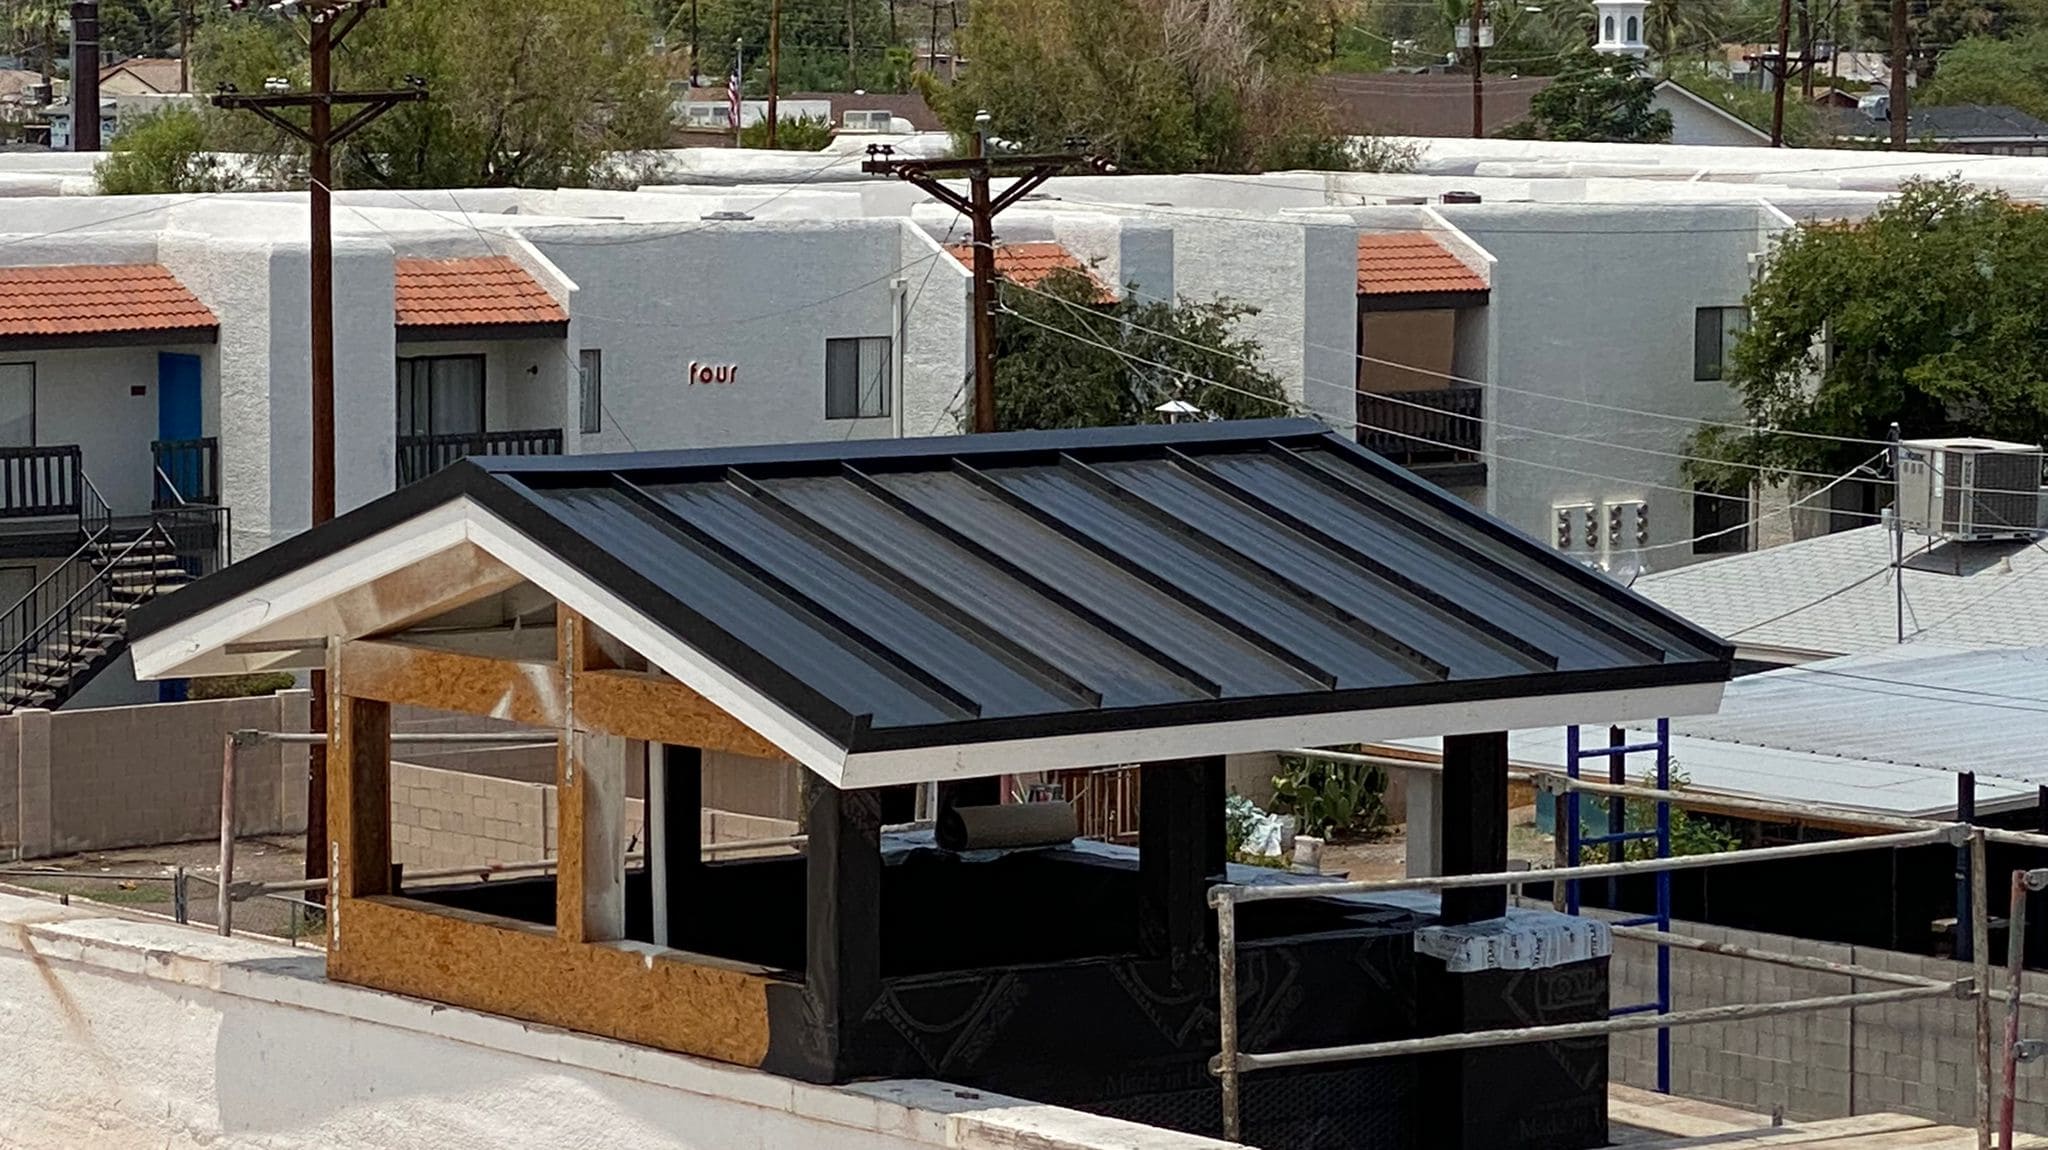 Birds-eye view of a Biltmore neighborhood, metal roofs gleaming under the Arizona sun.